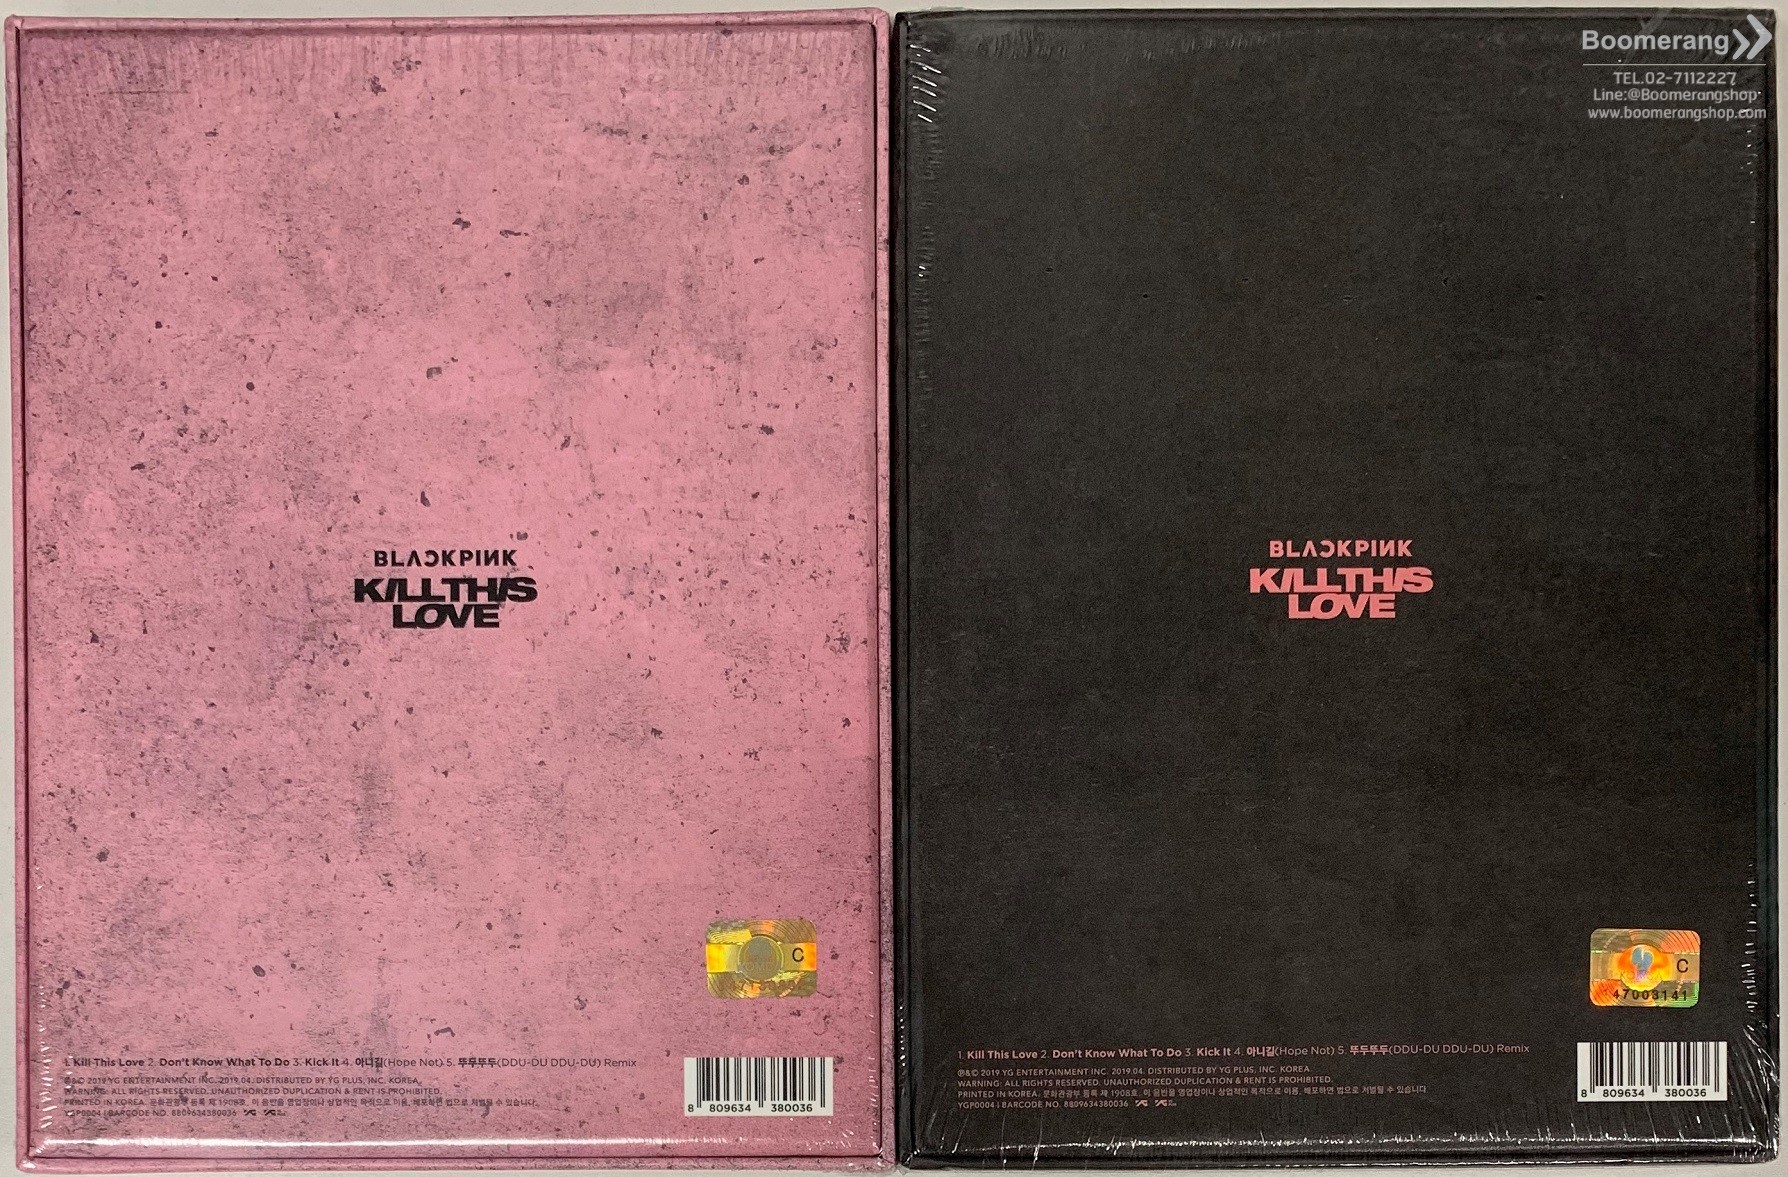  Blackpink - [Kill This Love] 2nd Mini Album Pink Ver. CD+1p  Poster/On+52p PhotoBook+16p Photo Zine+10p Accordion Lyrics Book+4p  PhotoCard+1p Polaroid+Sticker SET+Tracking K-POP Sealed : CDs & Vinyl